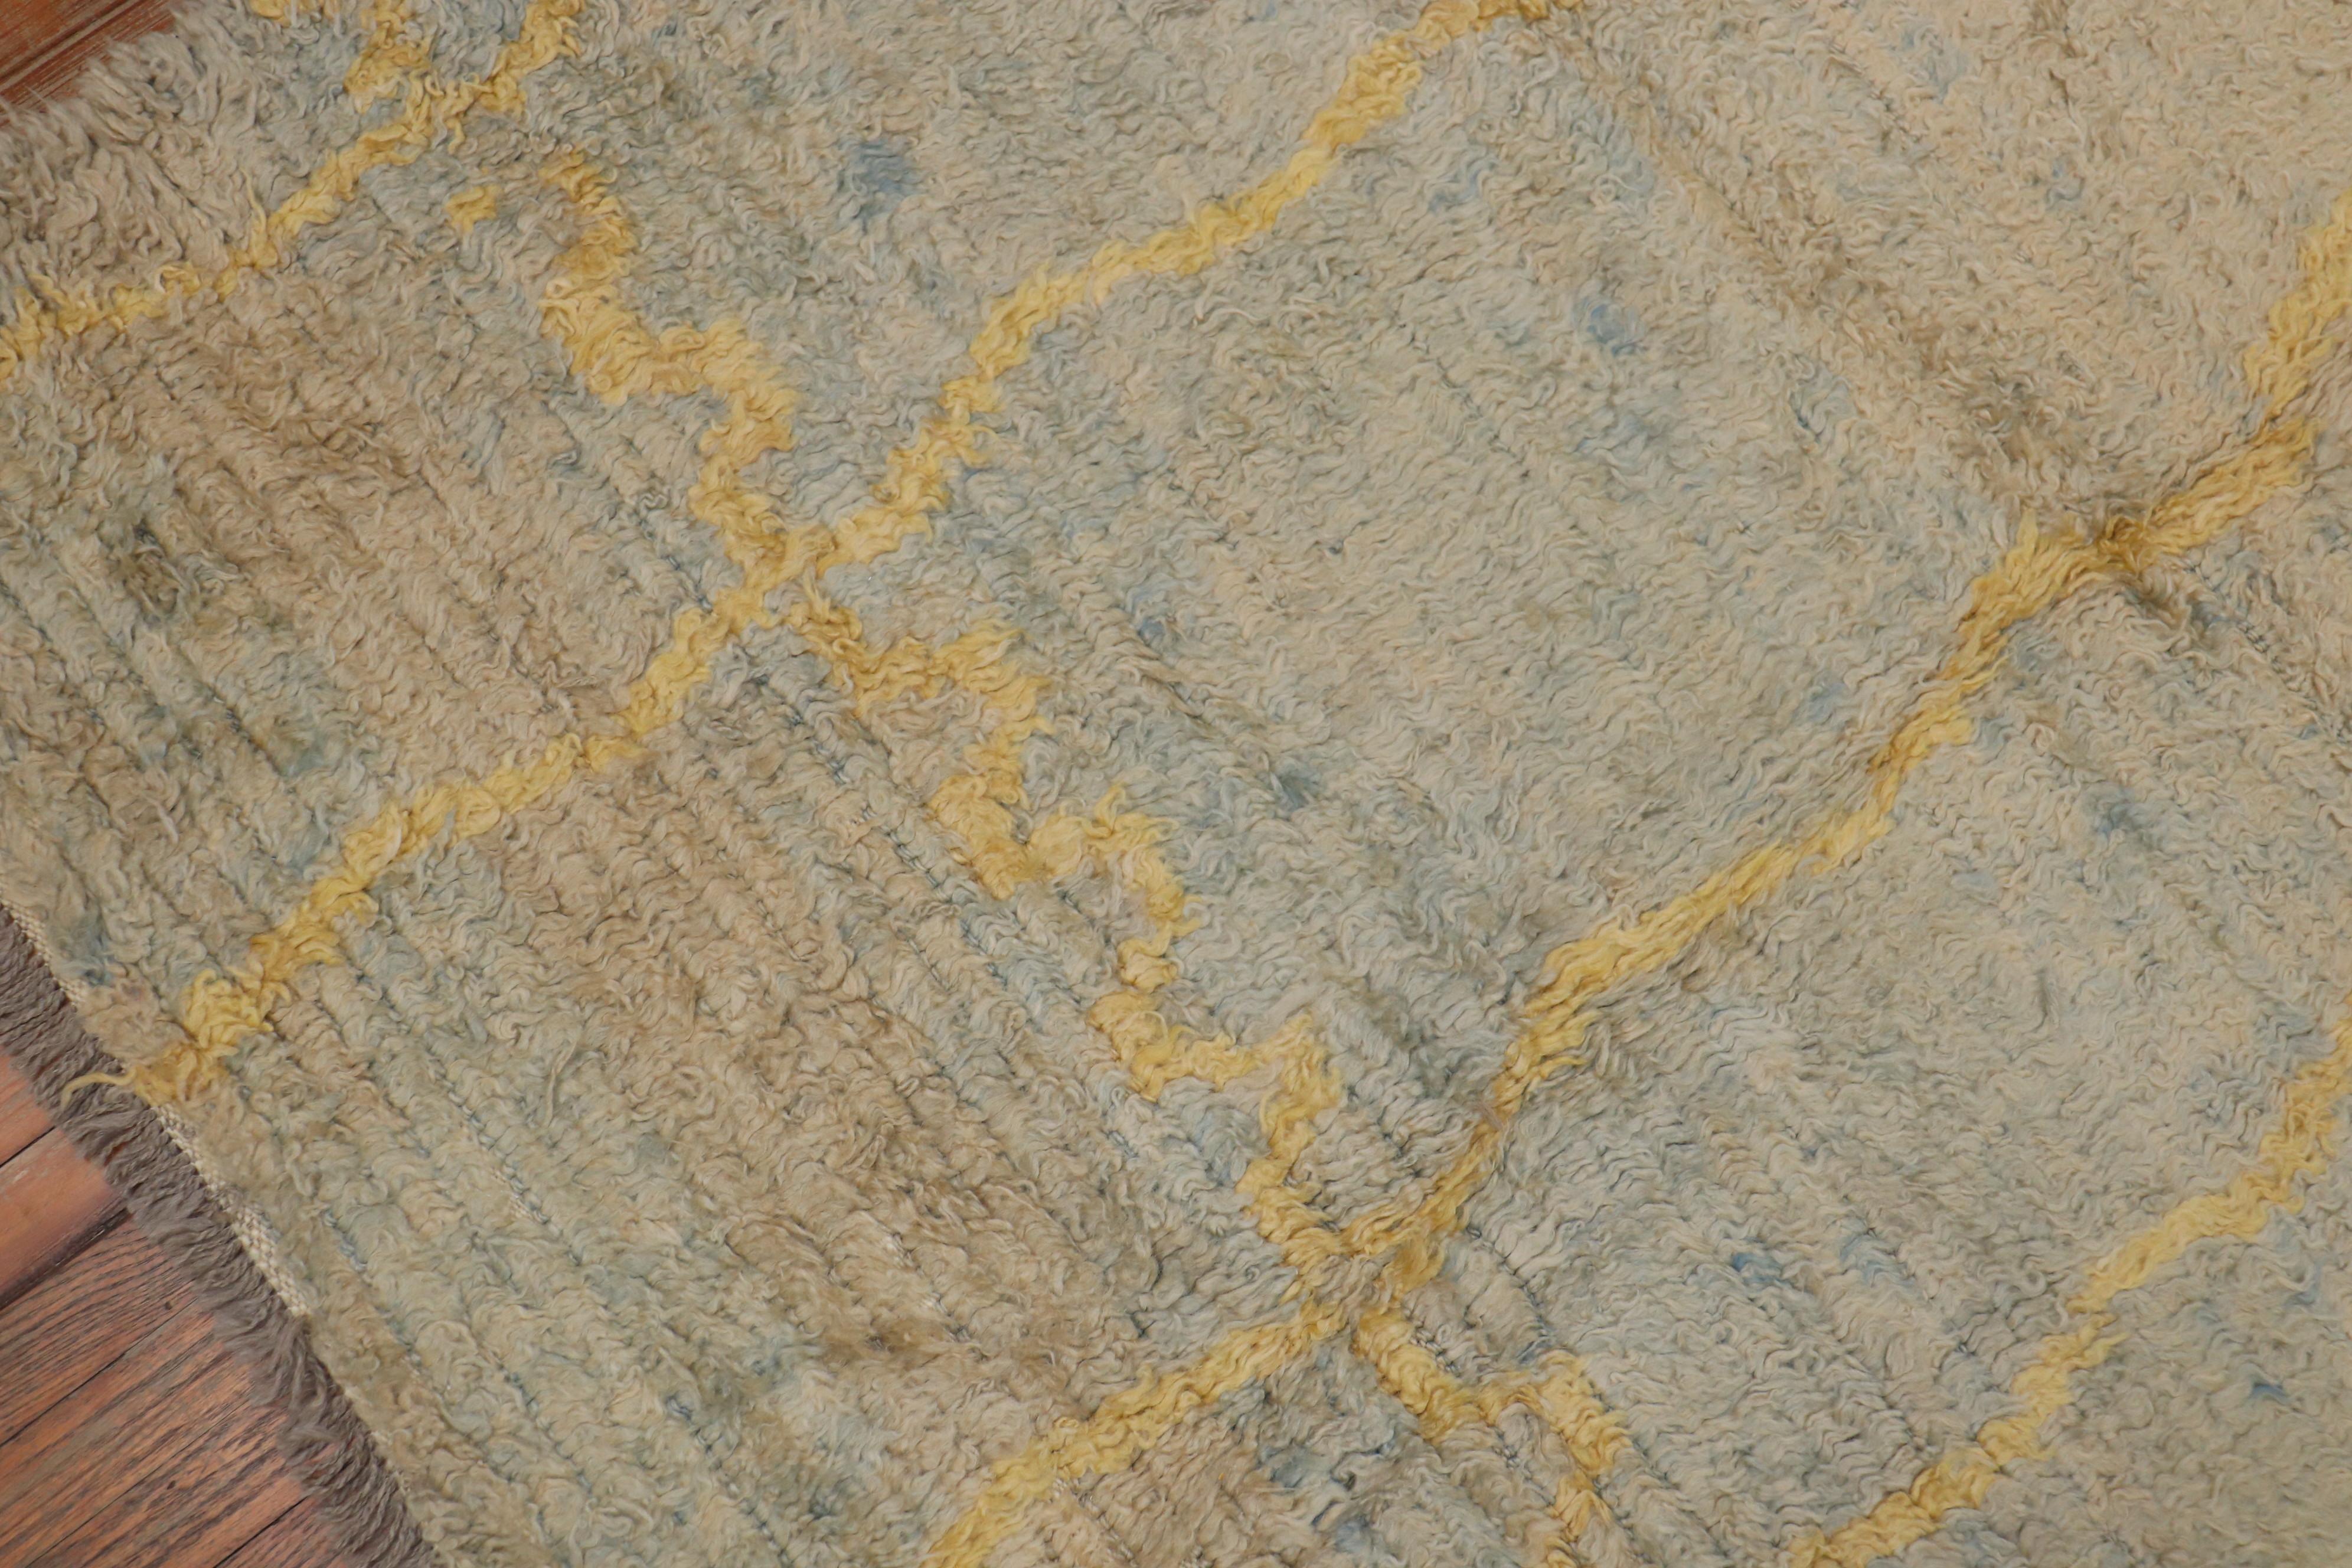 Light blue and yellow midcentury handwoven Shag Pile Turkish Tulu rug.

Measures: 6'2